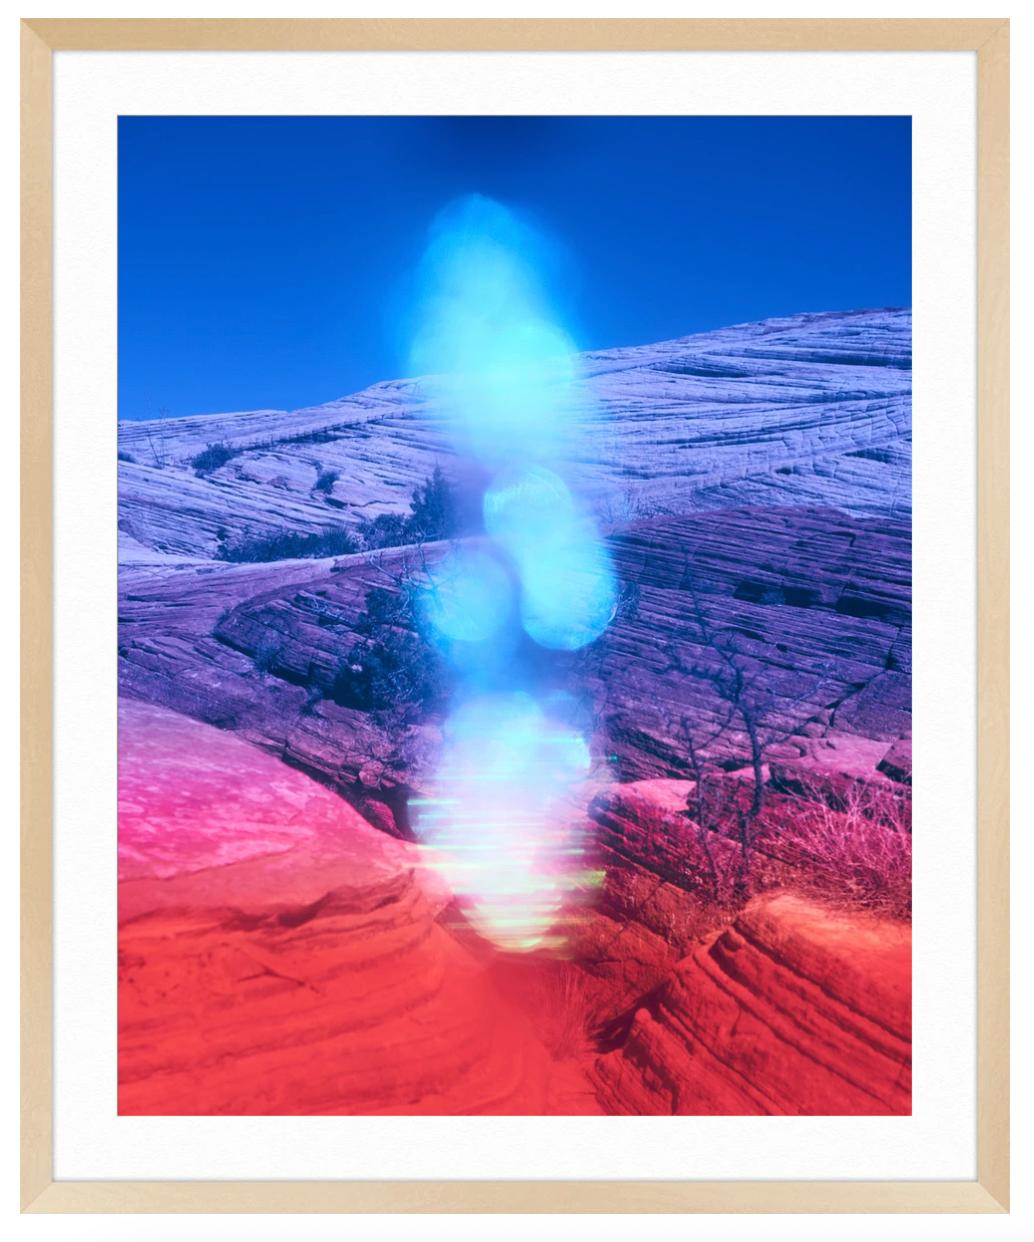 Snow Canyon 44 - Blue Landscape Photograph by Maciek Jasik